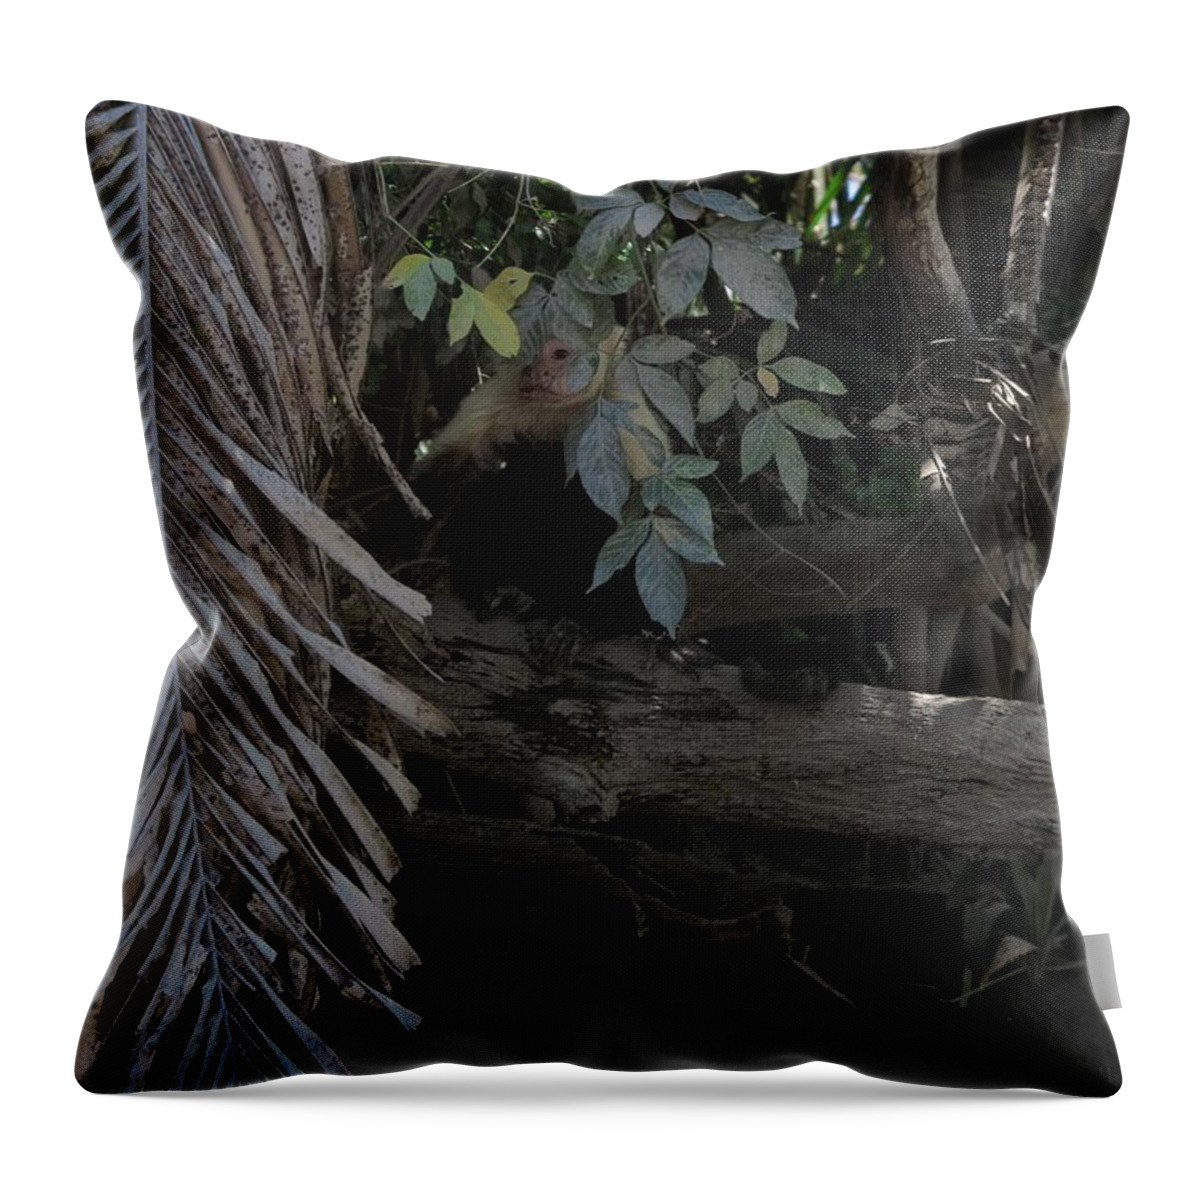 Capuchin Throw Pillow featuring the photograph Hiding by Jessica Myscofski